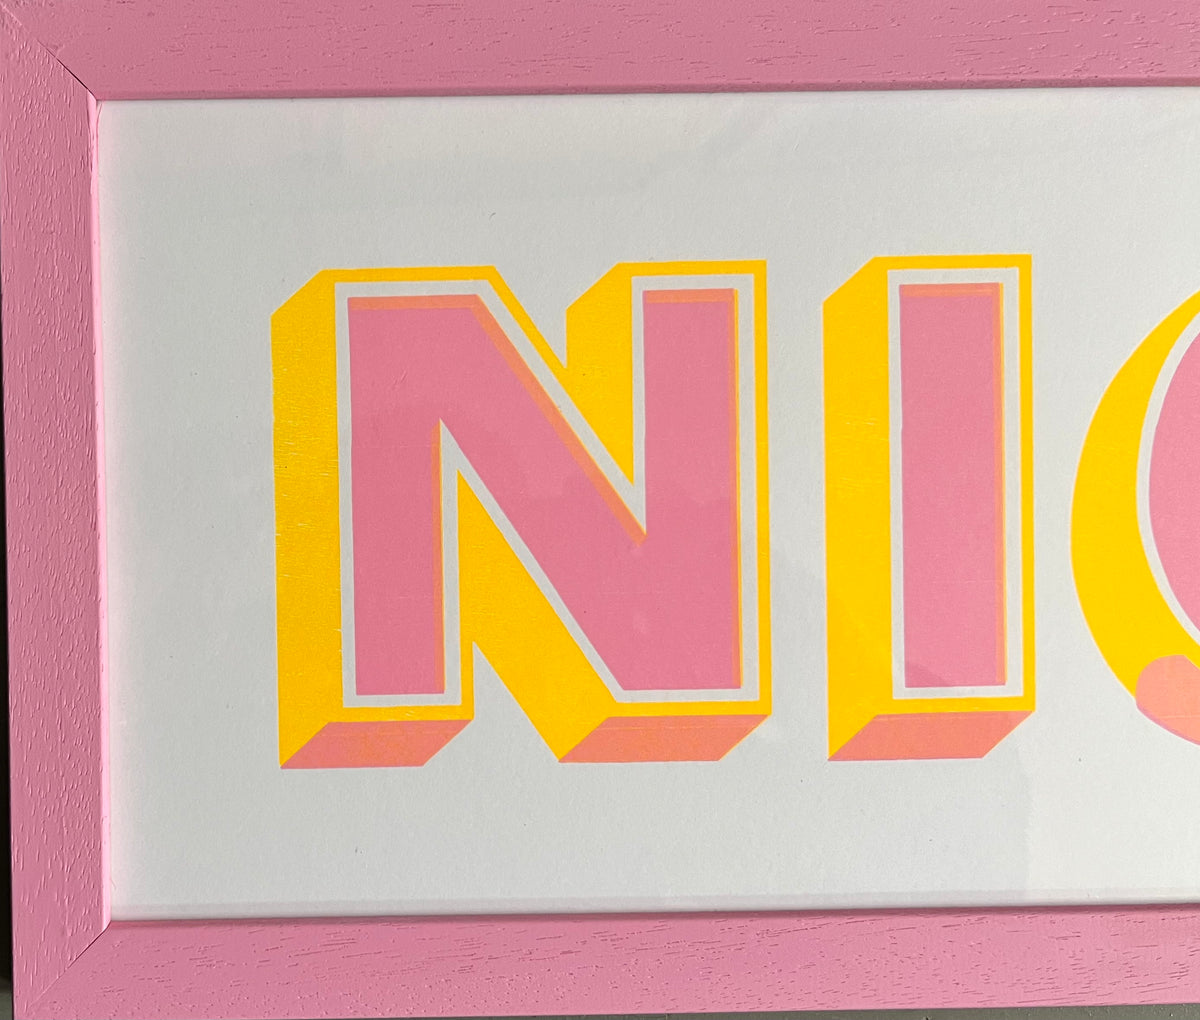 NICE (pink frame) by Thomas Mayo